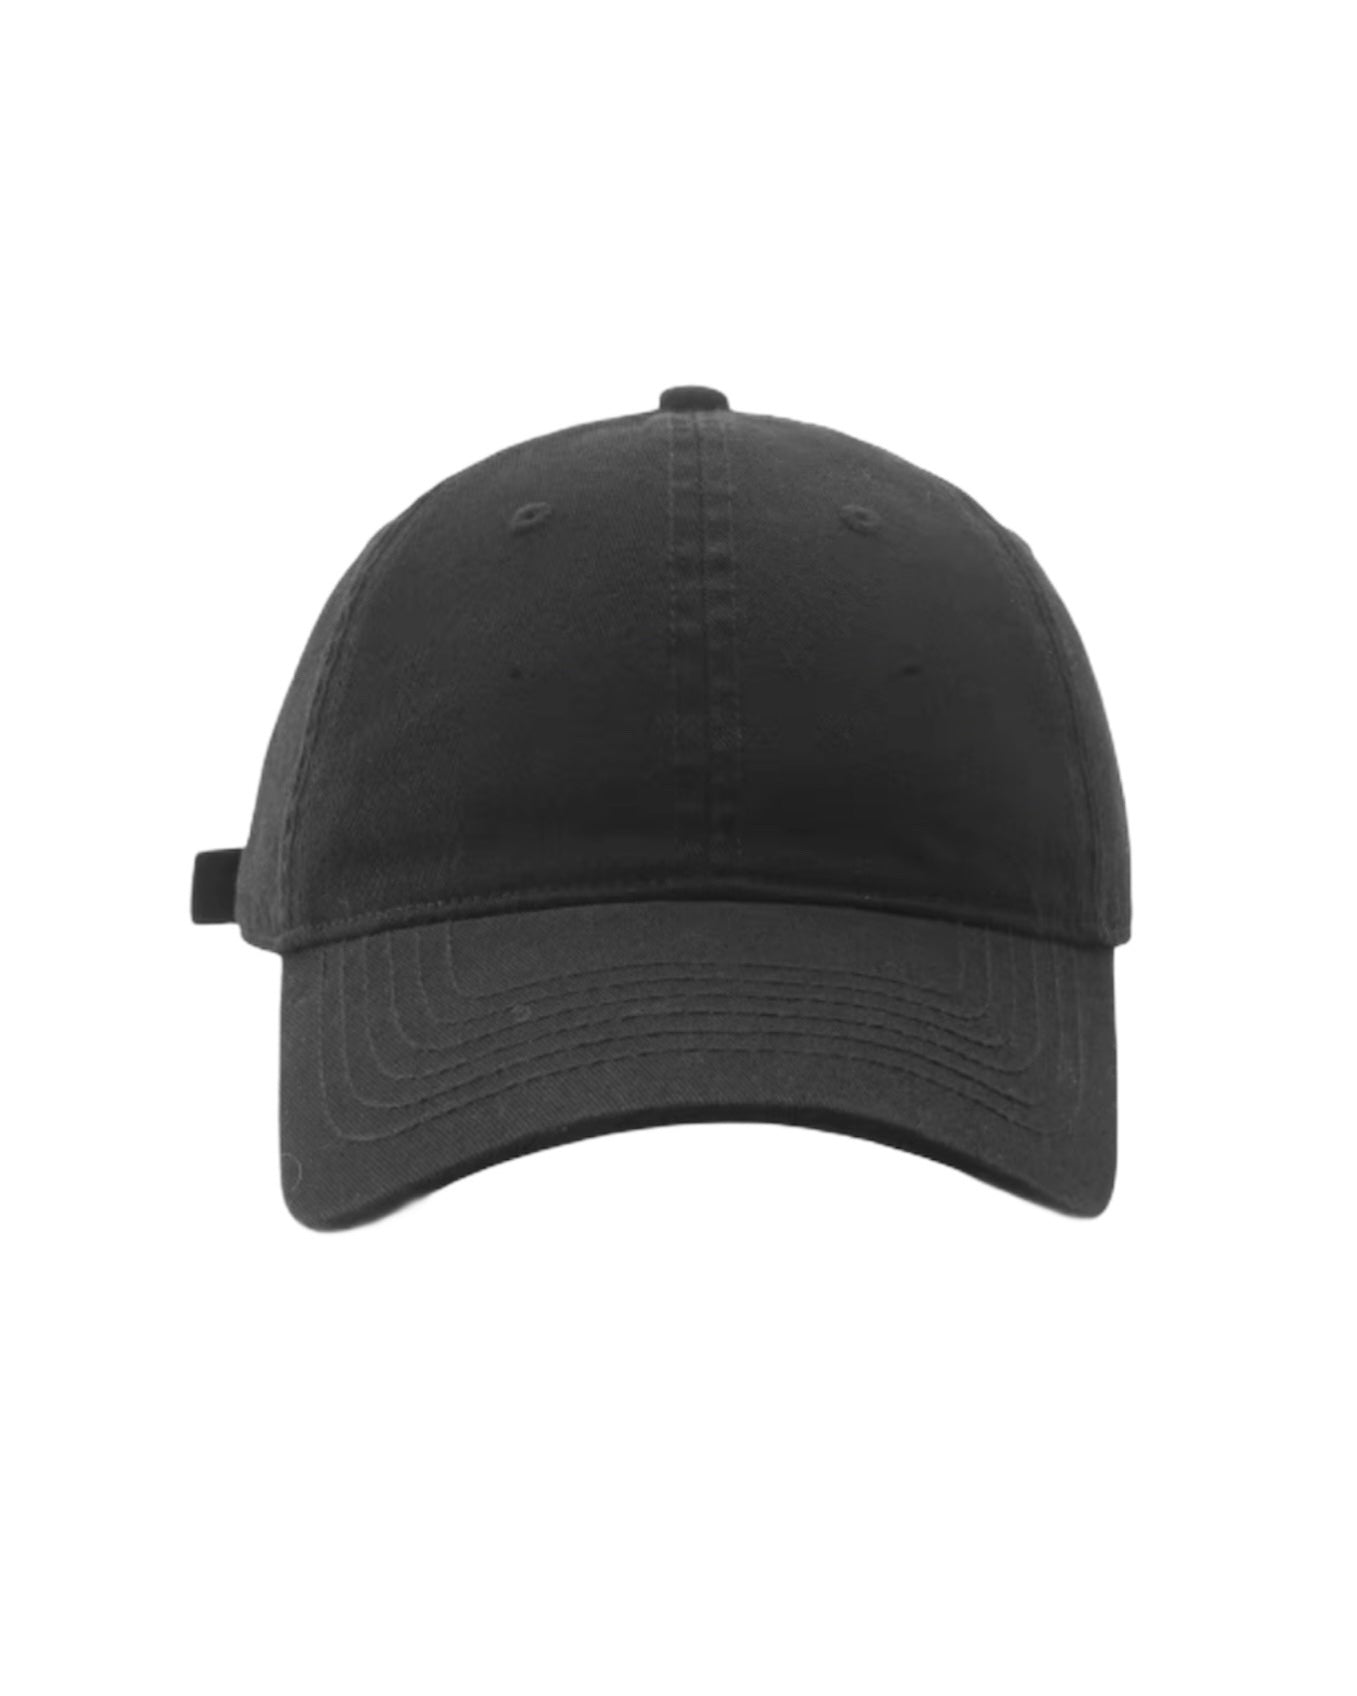 Black canvas cap *pre-order*